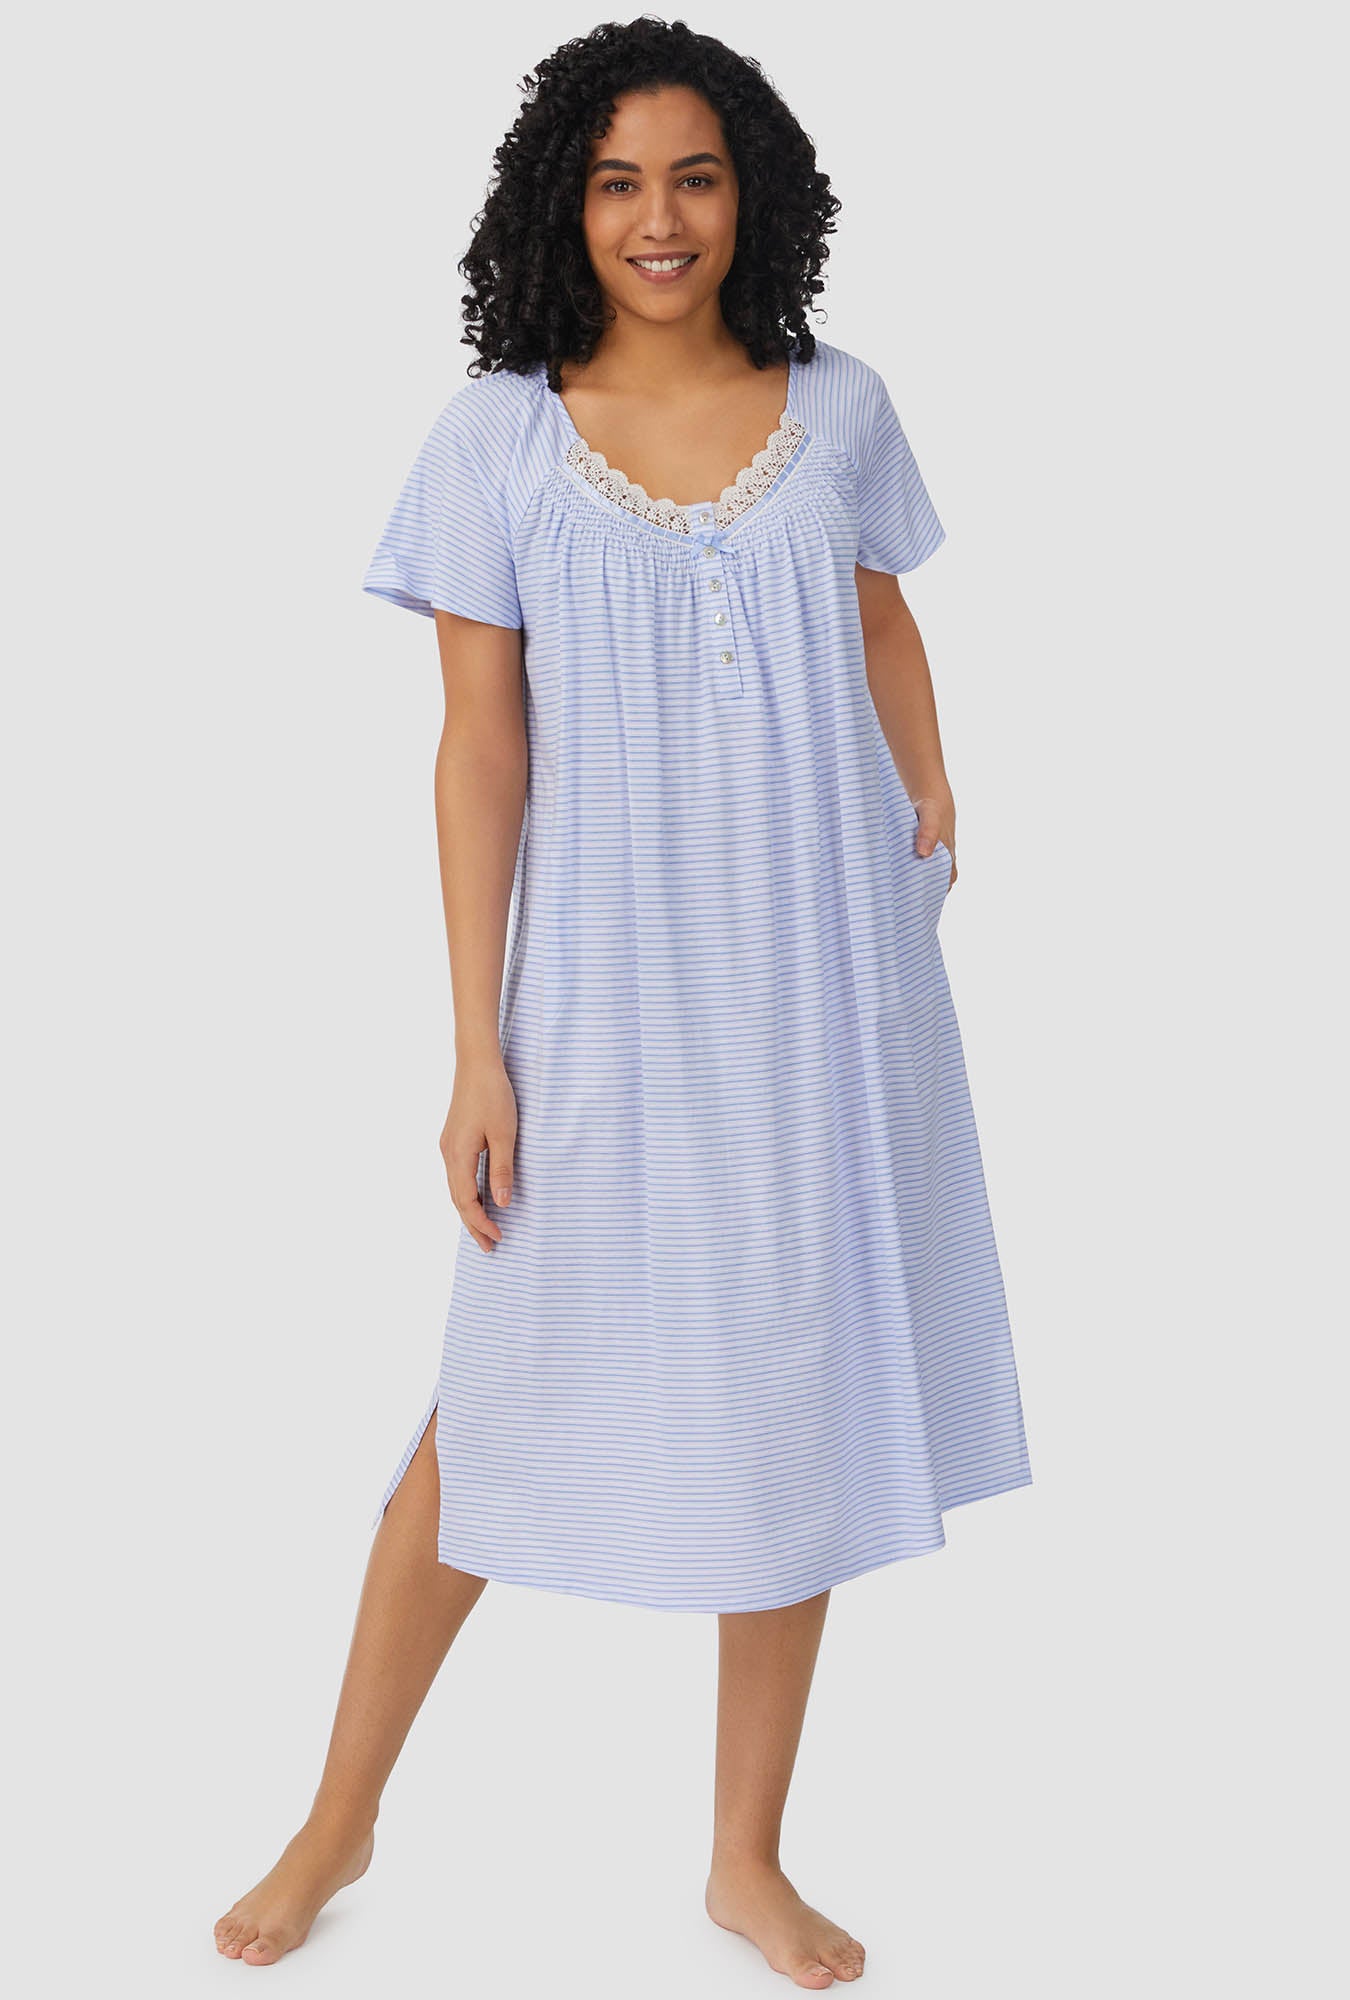 Blue Horizontal Stripe Short Sleeve Nightgown - Aria Sleepwear